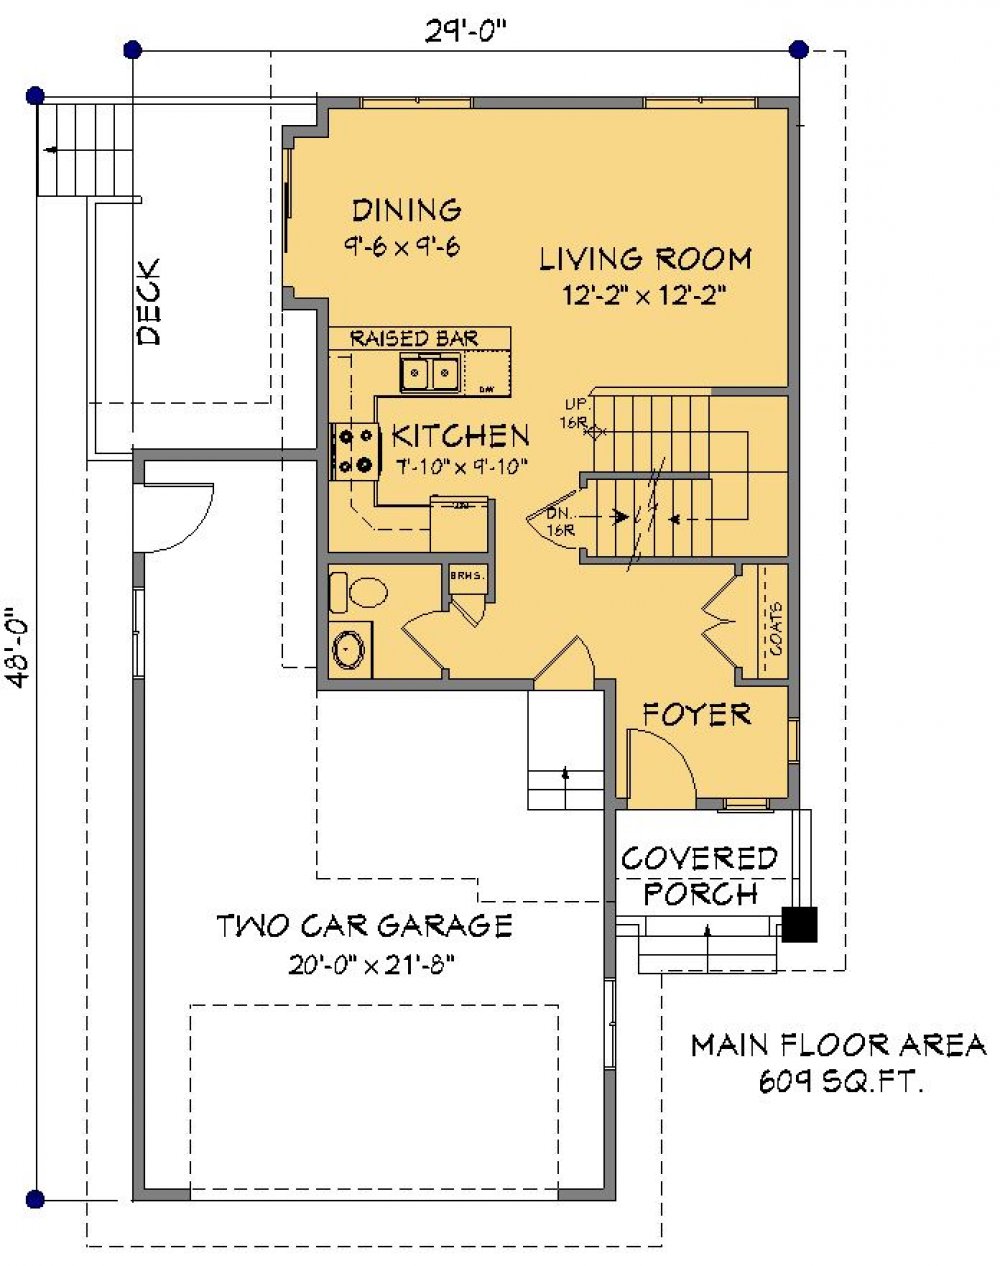 House Plan E1737-10  Main Floor Plan